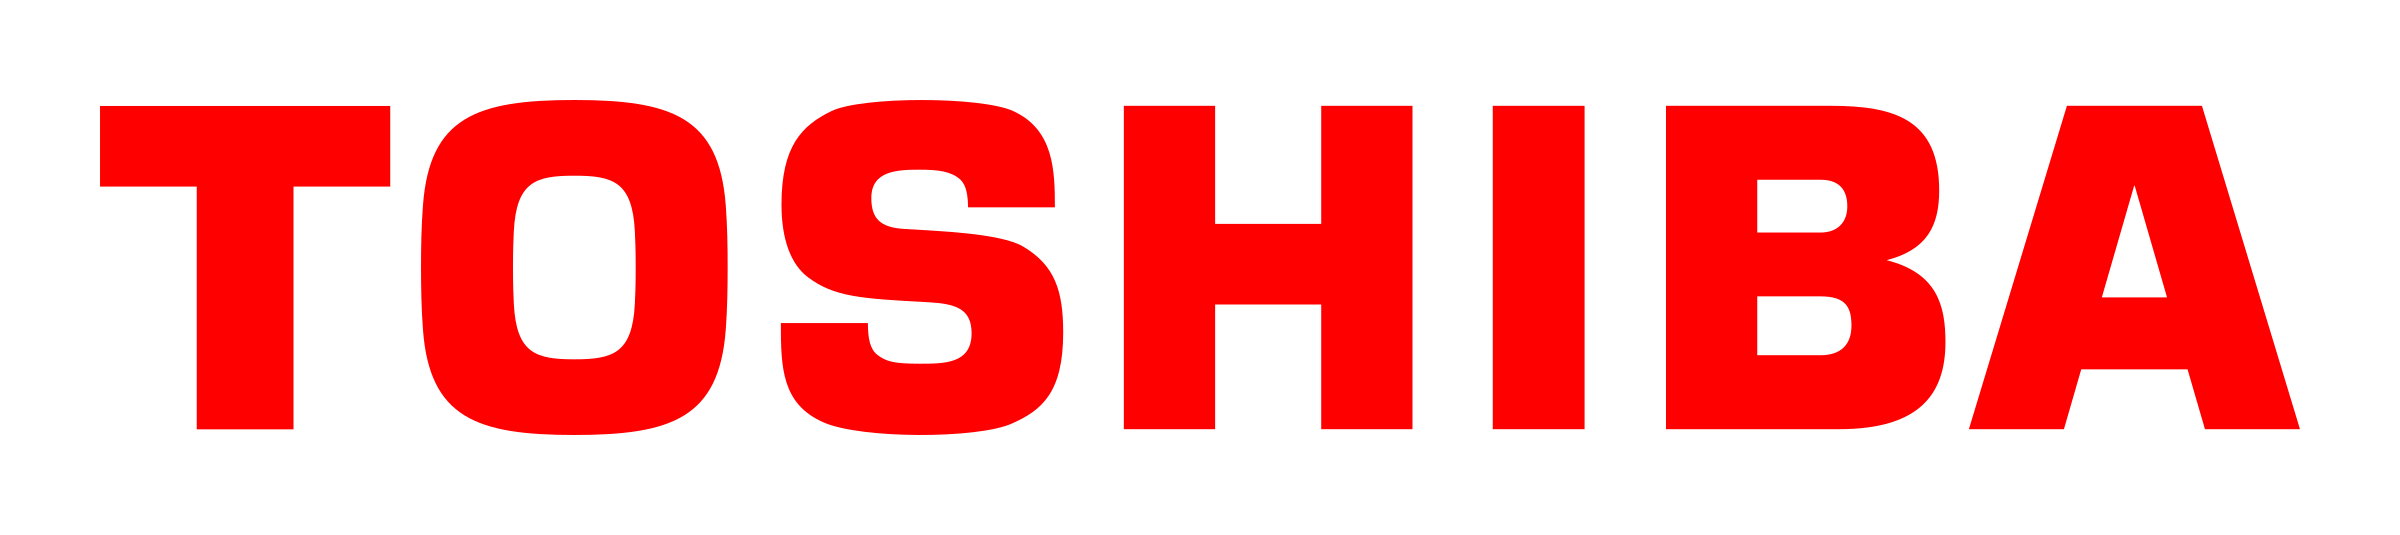  Toshiba logo